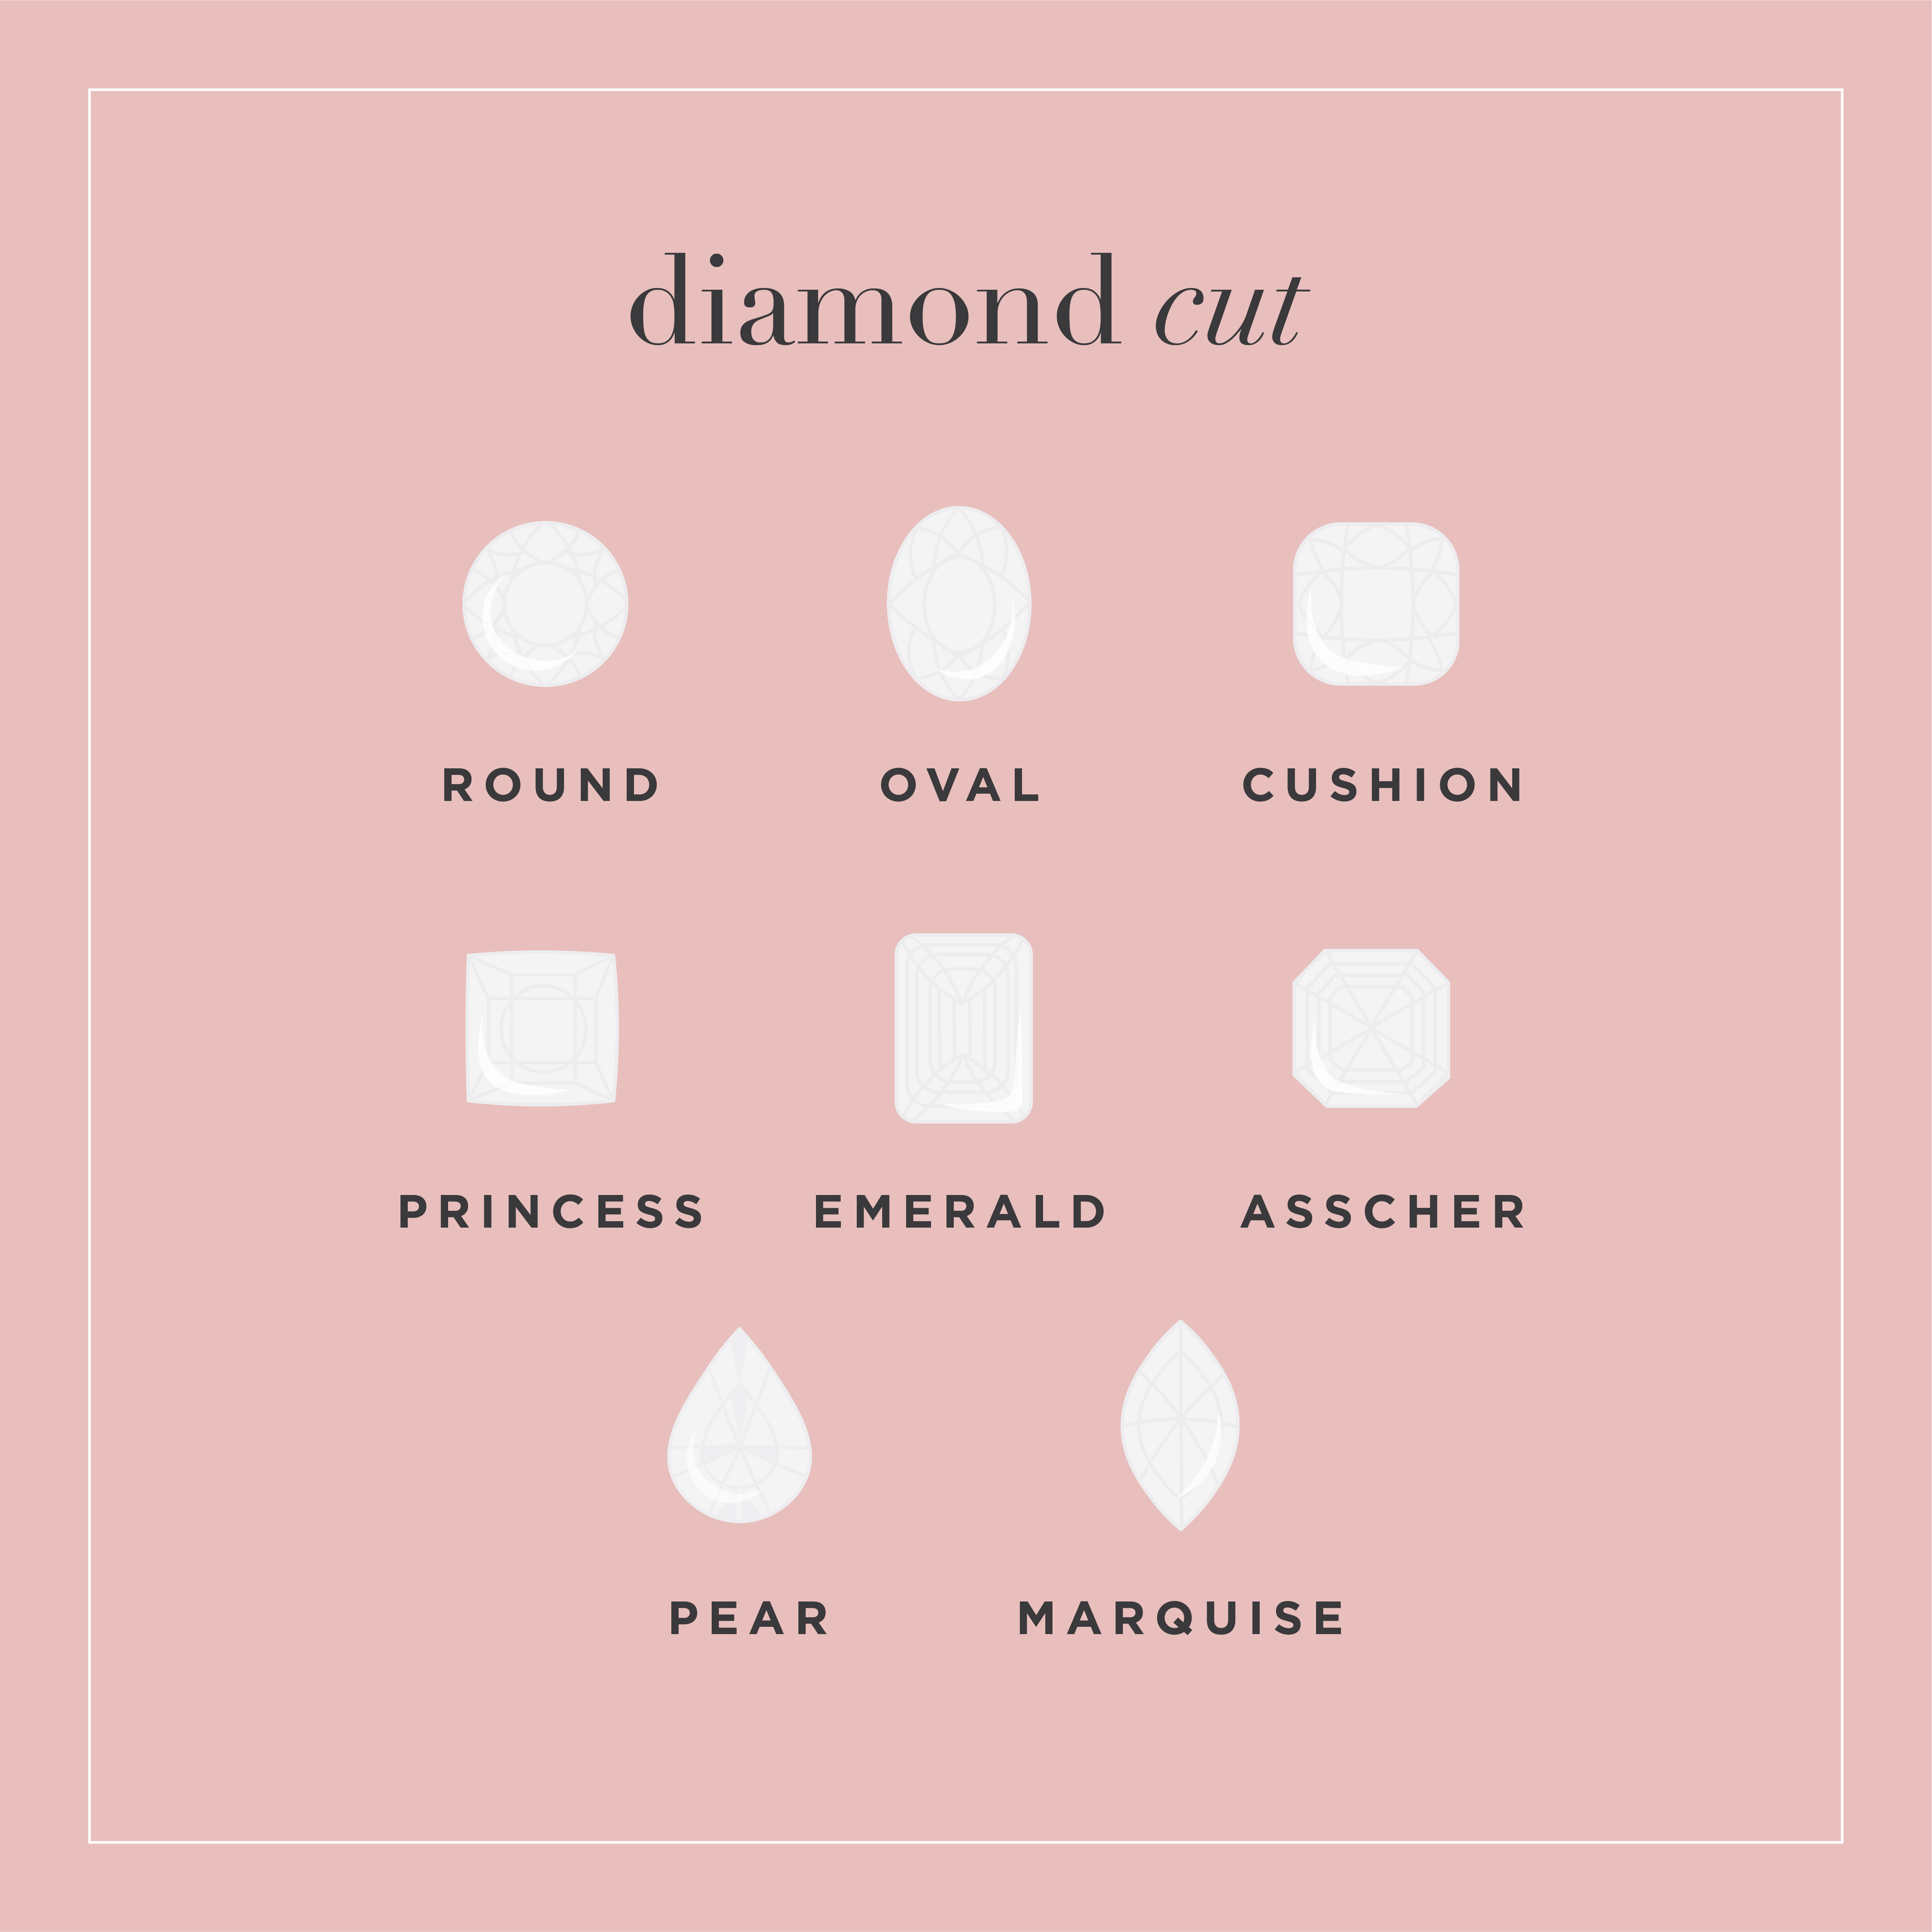 diamond cut guide